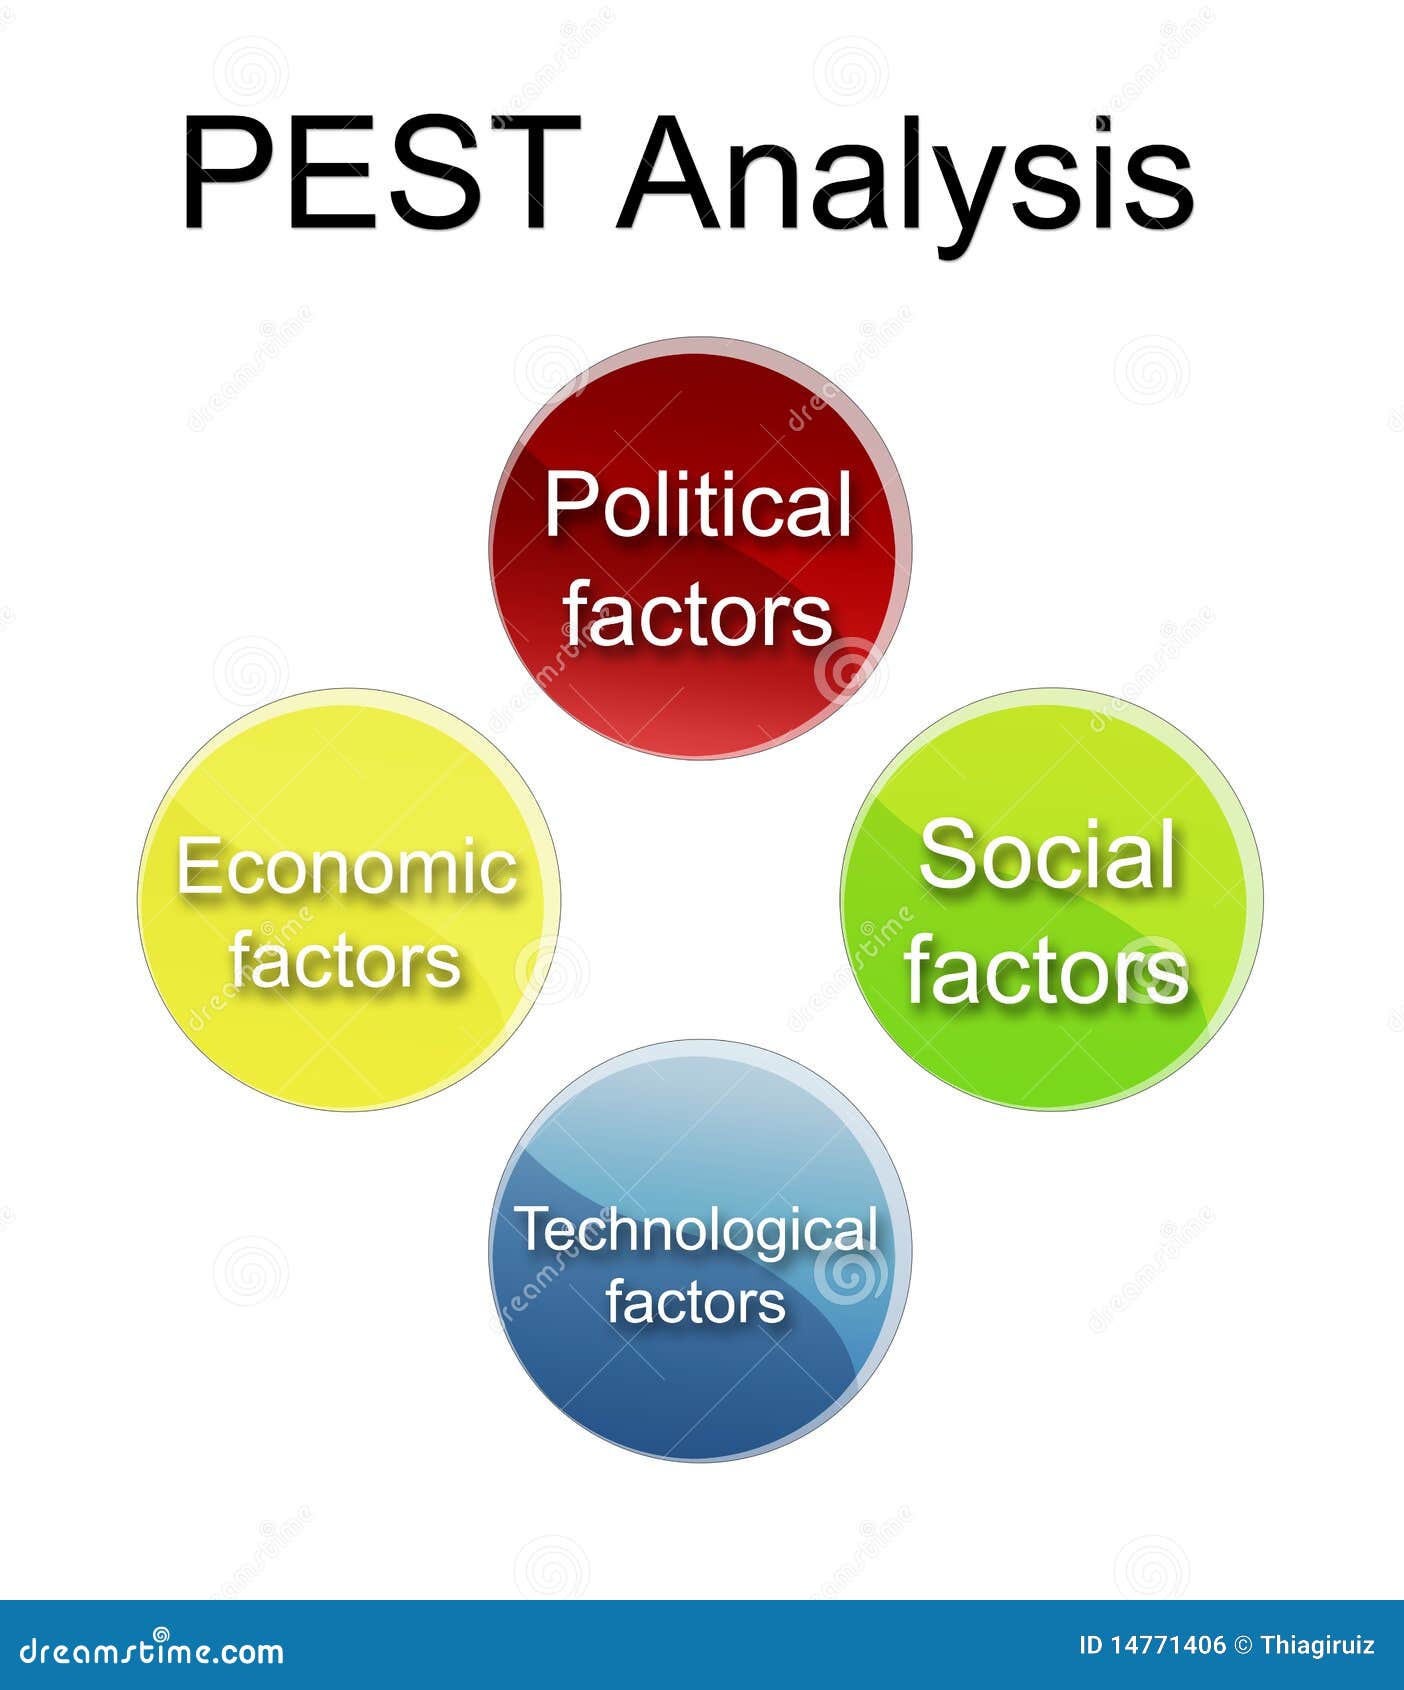 Pest analysis of idea cellular